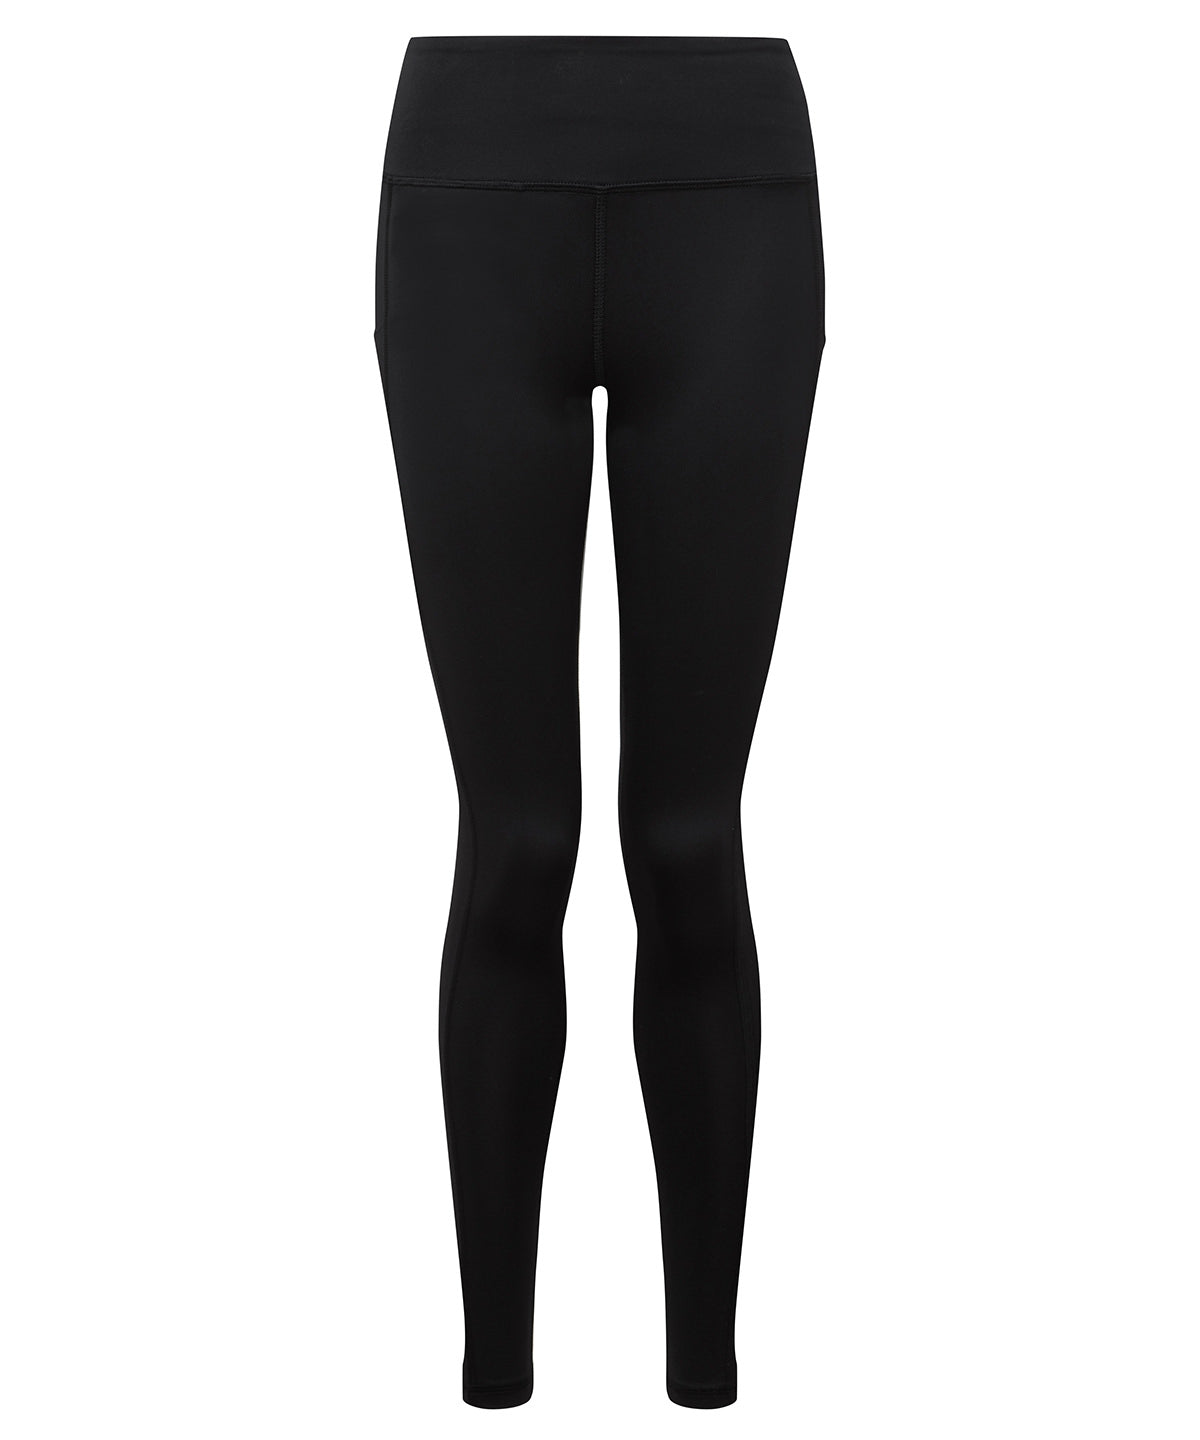 Women’s TriDri® performance leggings with pockets